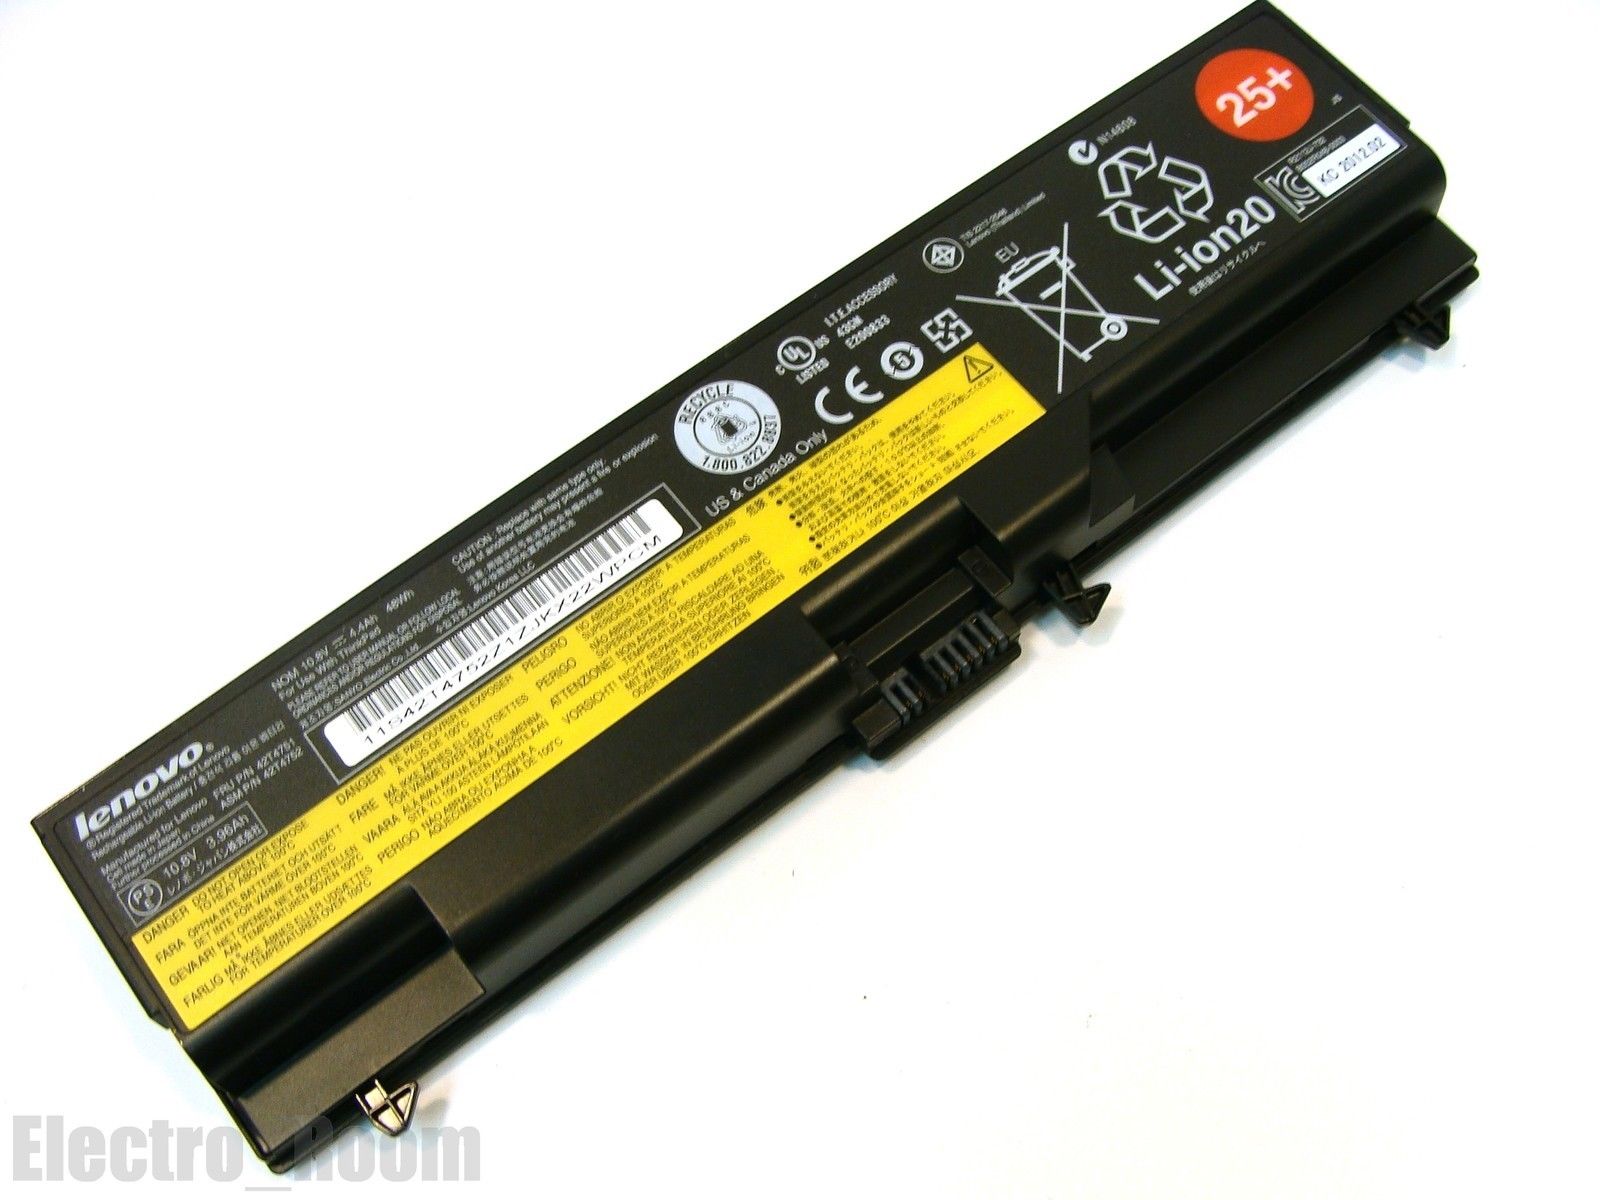 Battery 42T4751 10.8V 4.4Ah 48Wh Tested Lenovo Thinkpad Edge 15 15.6"